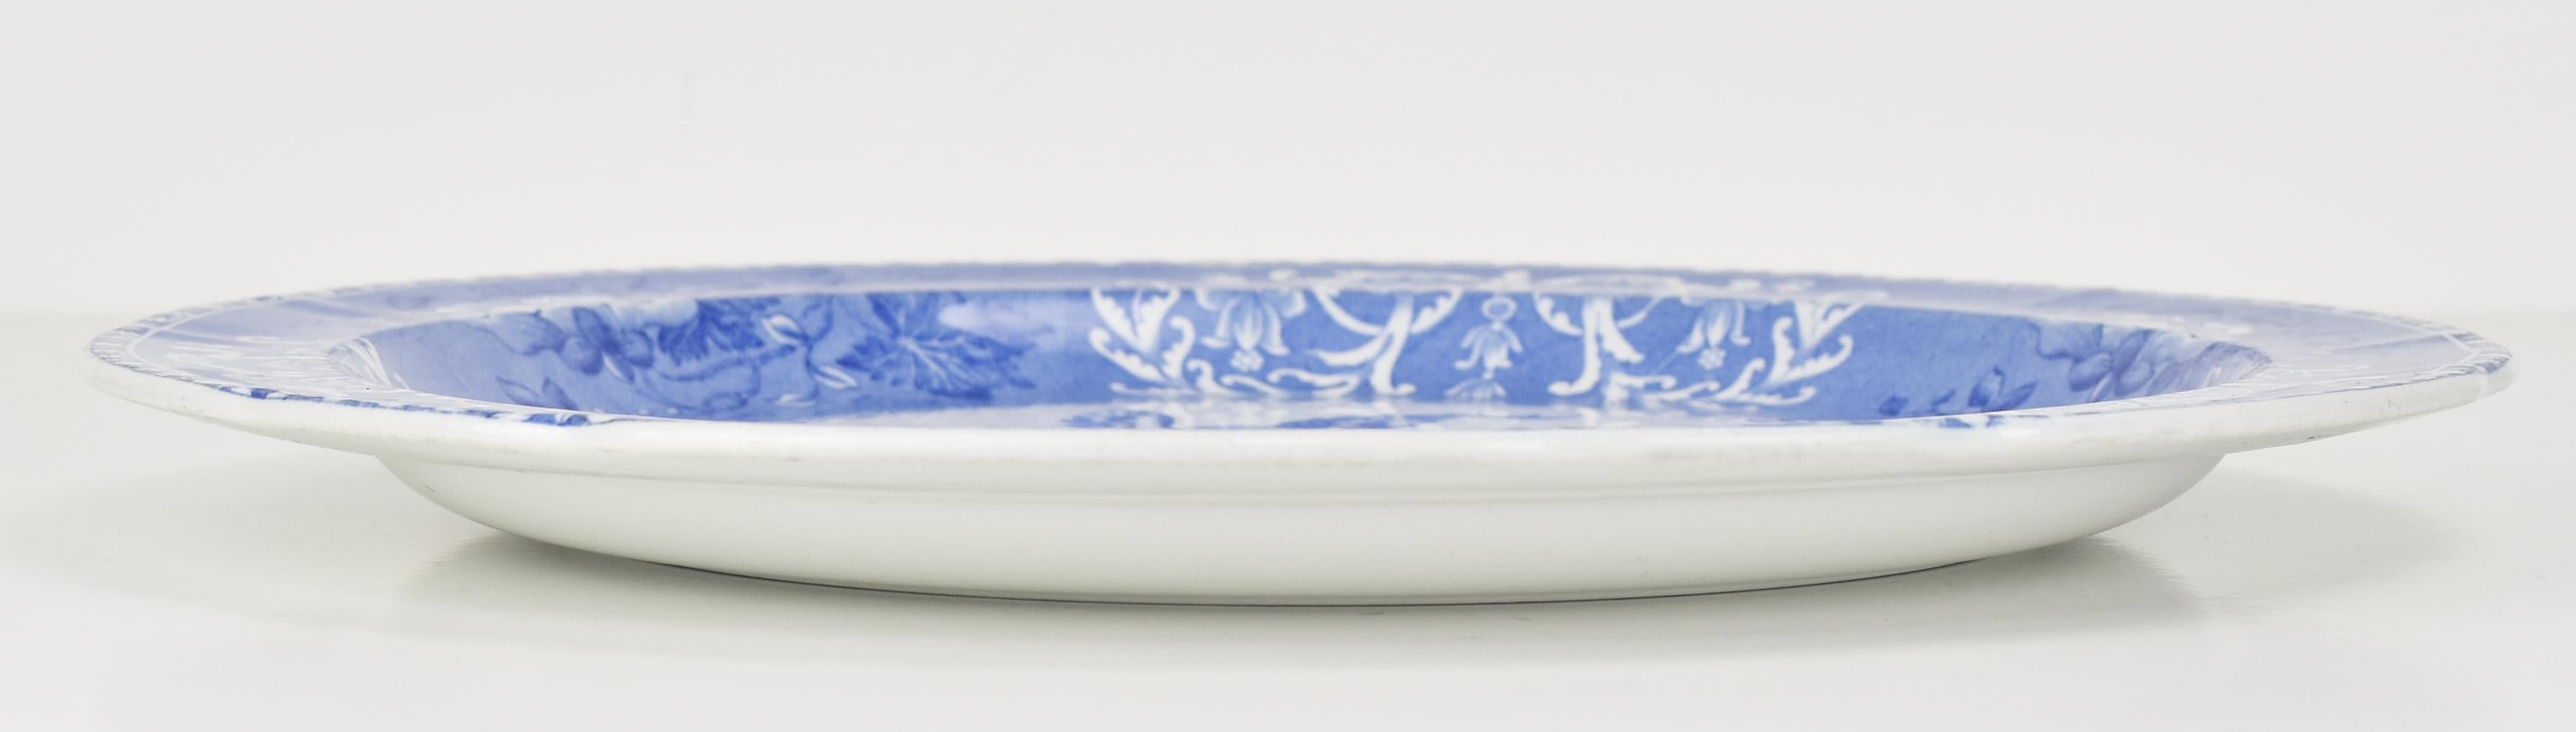 Ceramic Rare Large Round Antique Spode Serving Platter Dish Plate Camilla Transferware For Sale